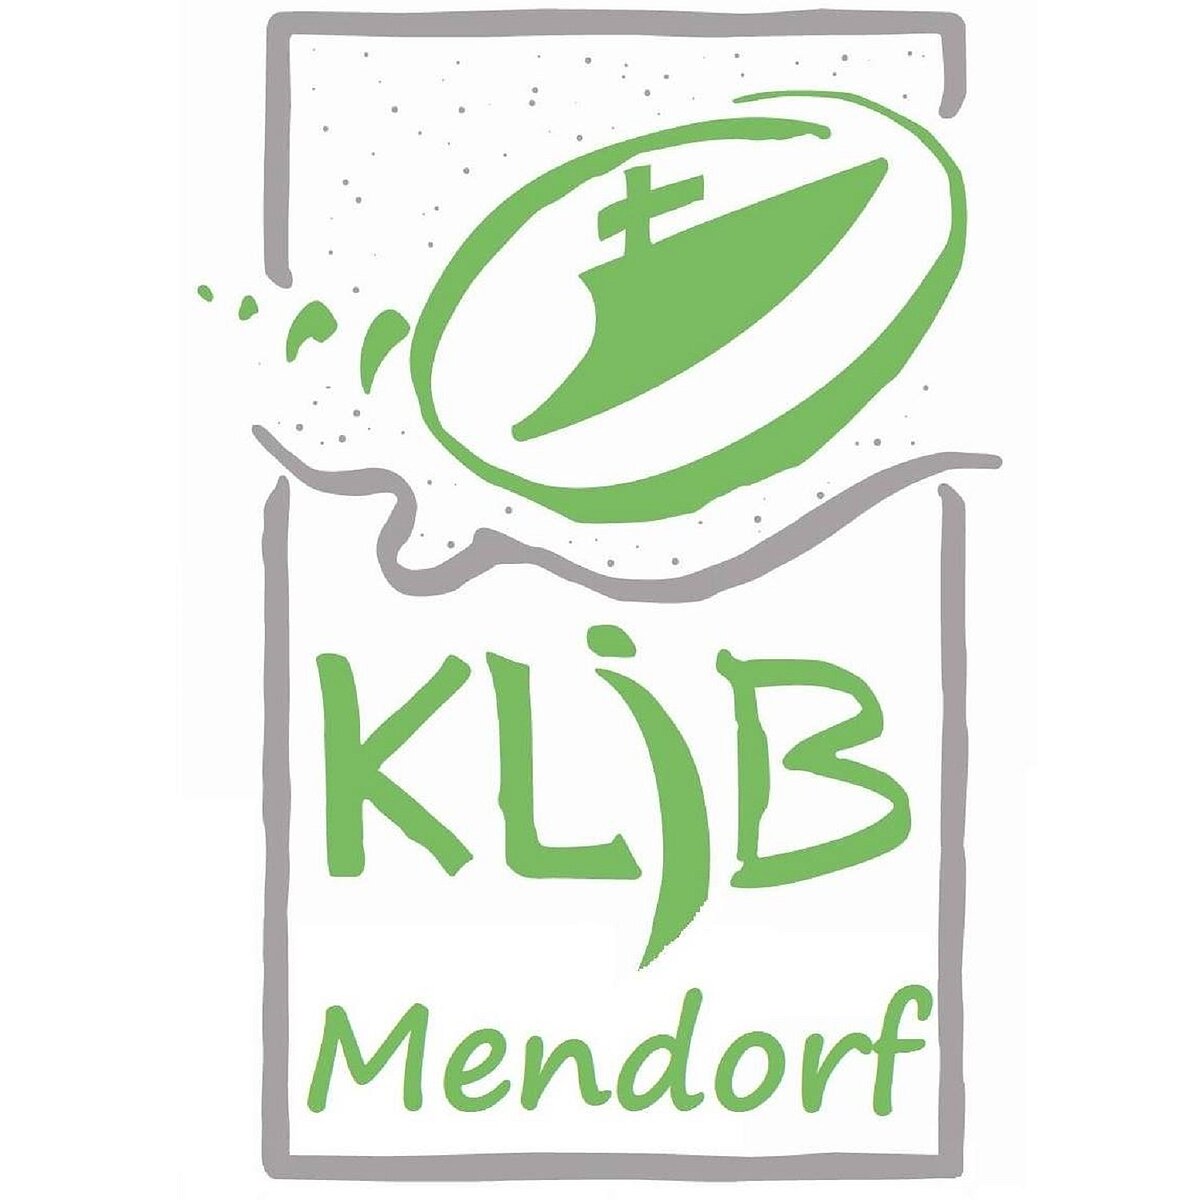 kljb-mendorf.jpg